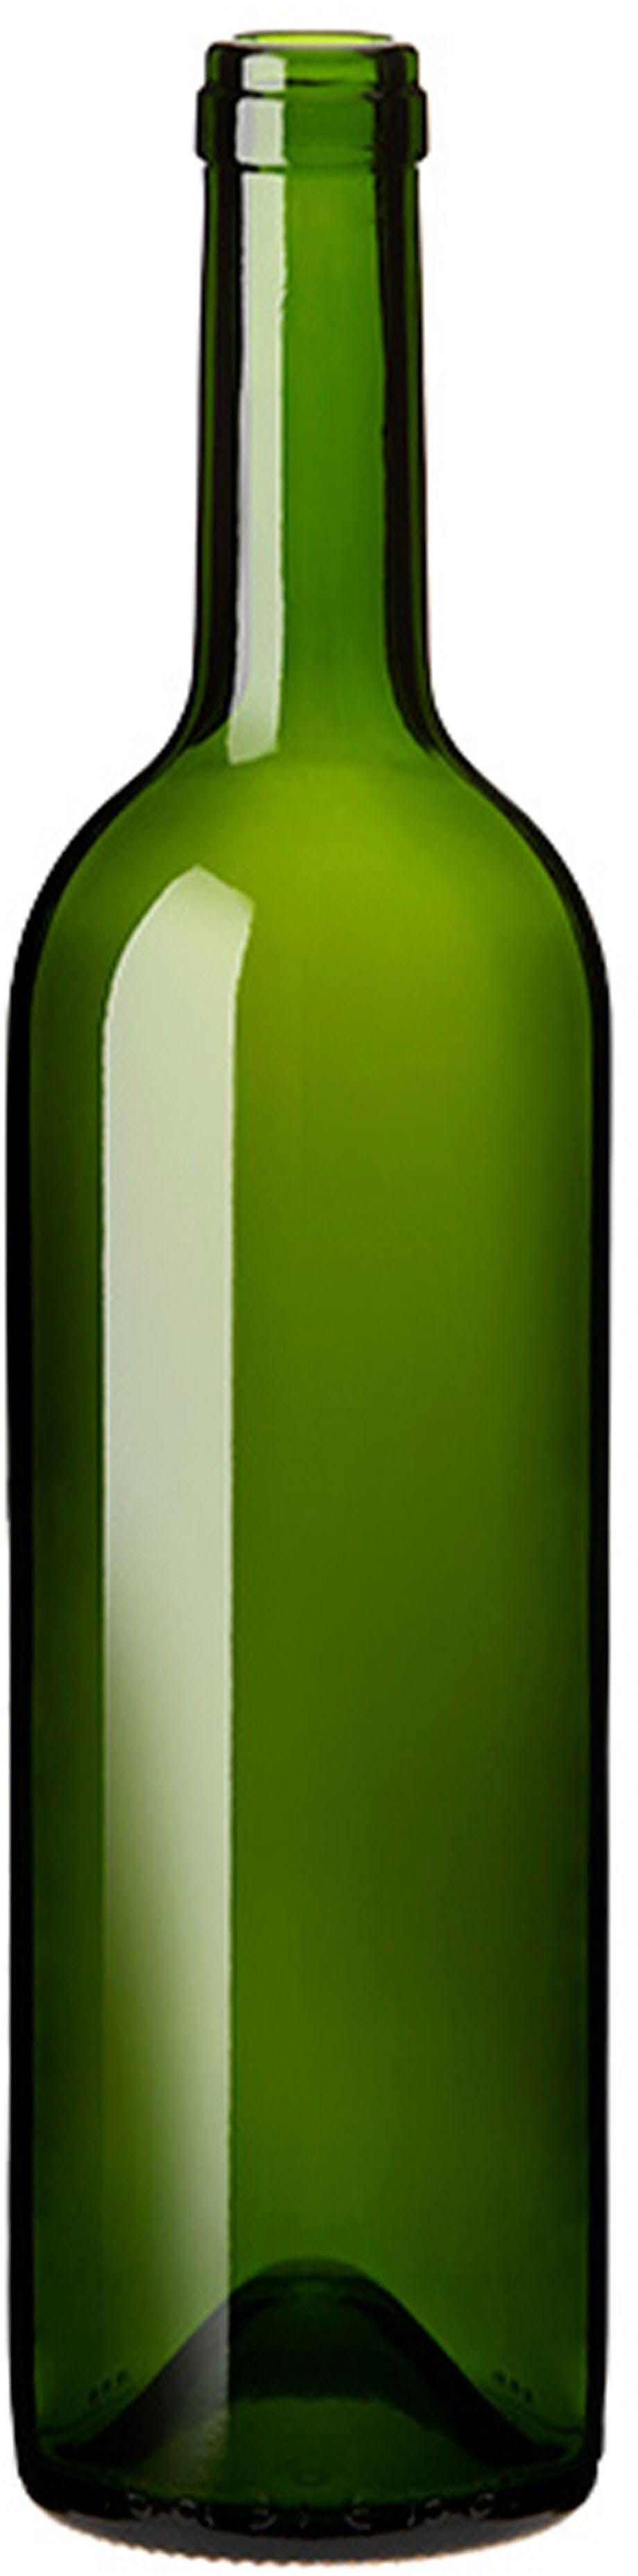 Bottiglia bordolese   SEDUCCION 750 ml BG-Sughero